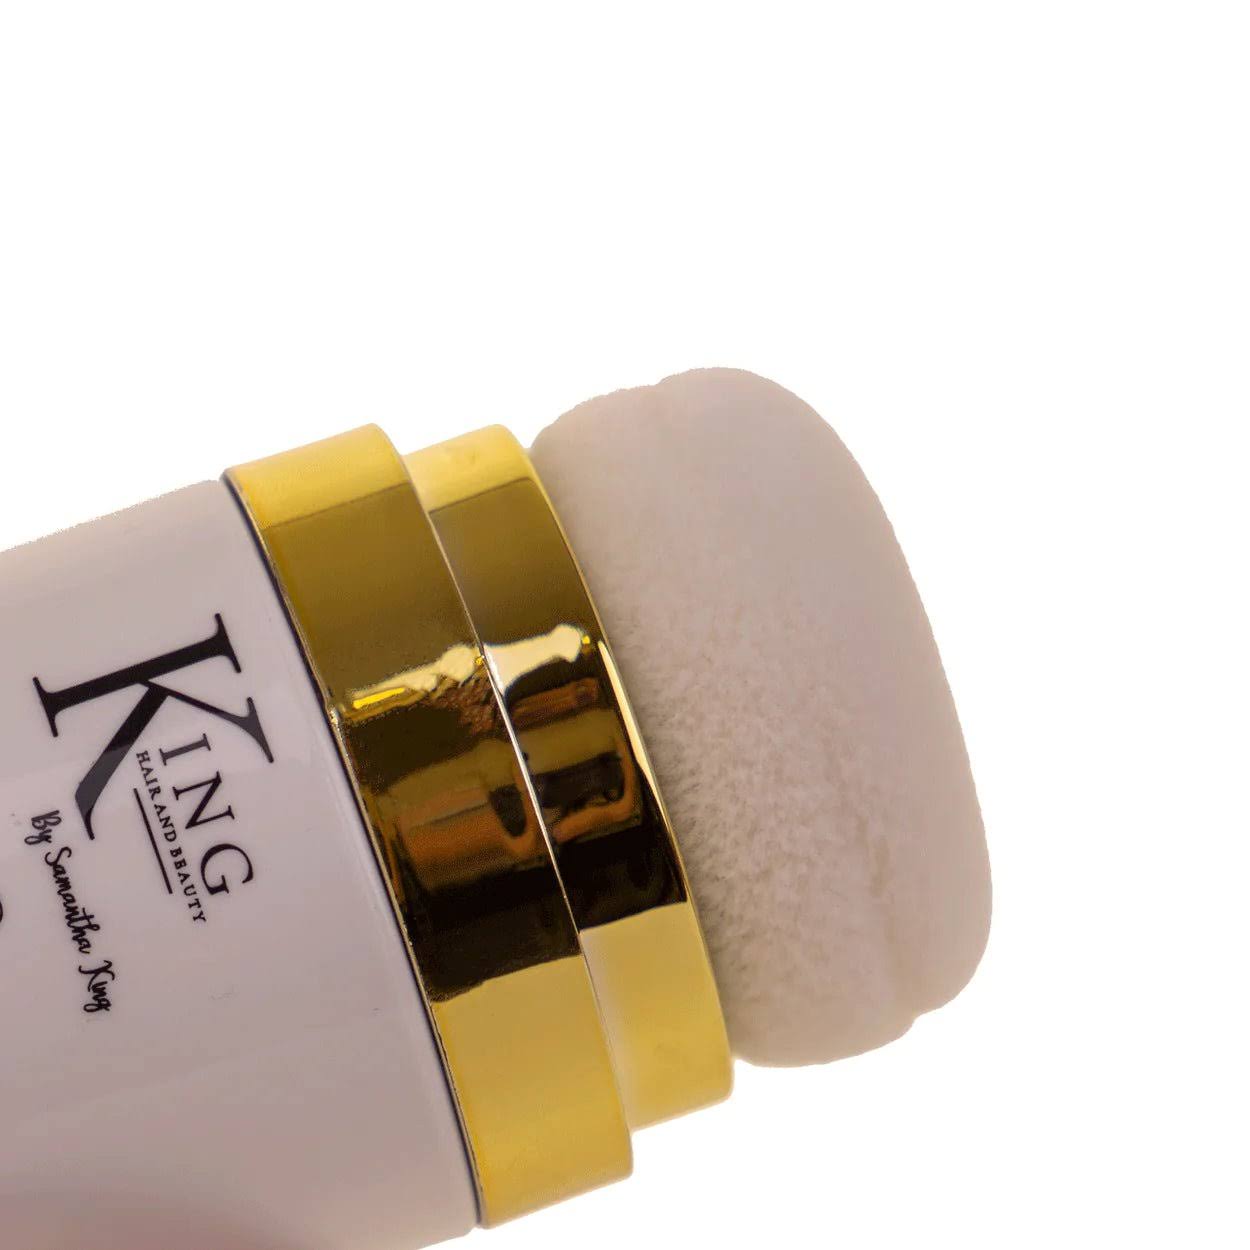 King Hair & Beauty Gold Dust - Dry Shampoo 8.5g